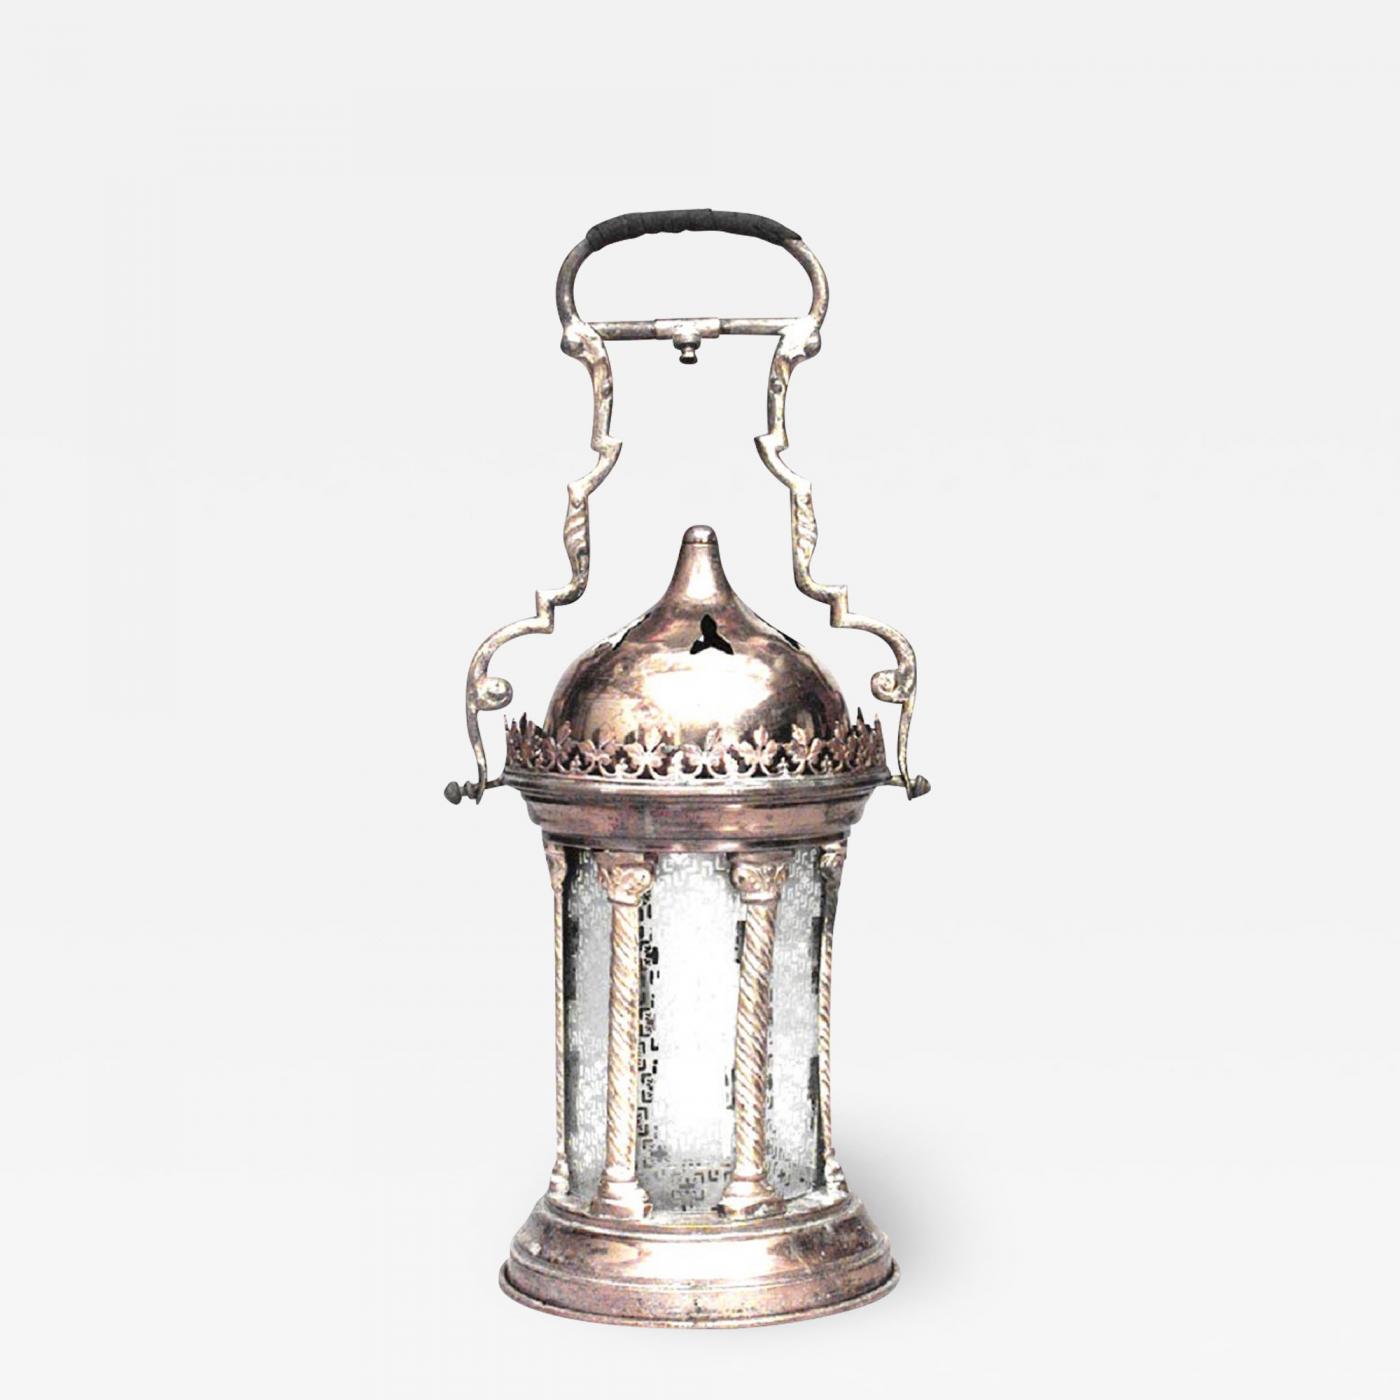 Italian rococo style brass hand lantern